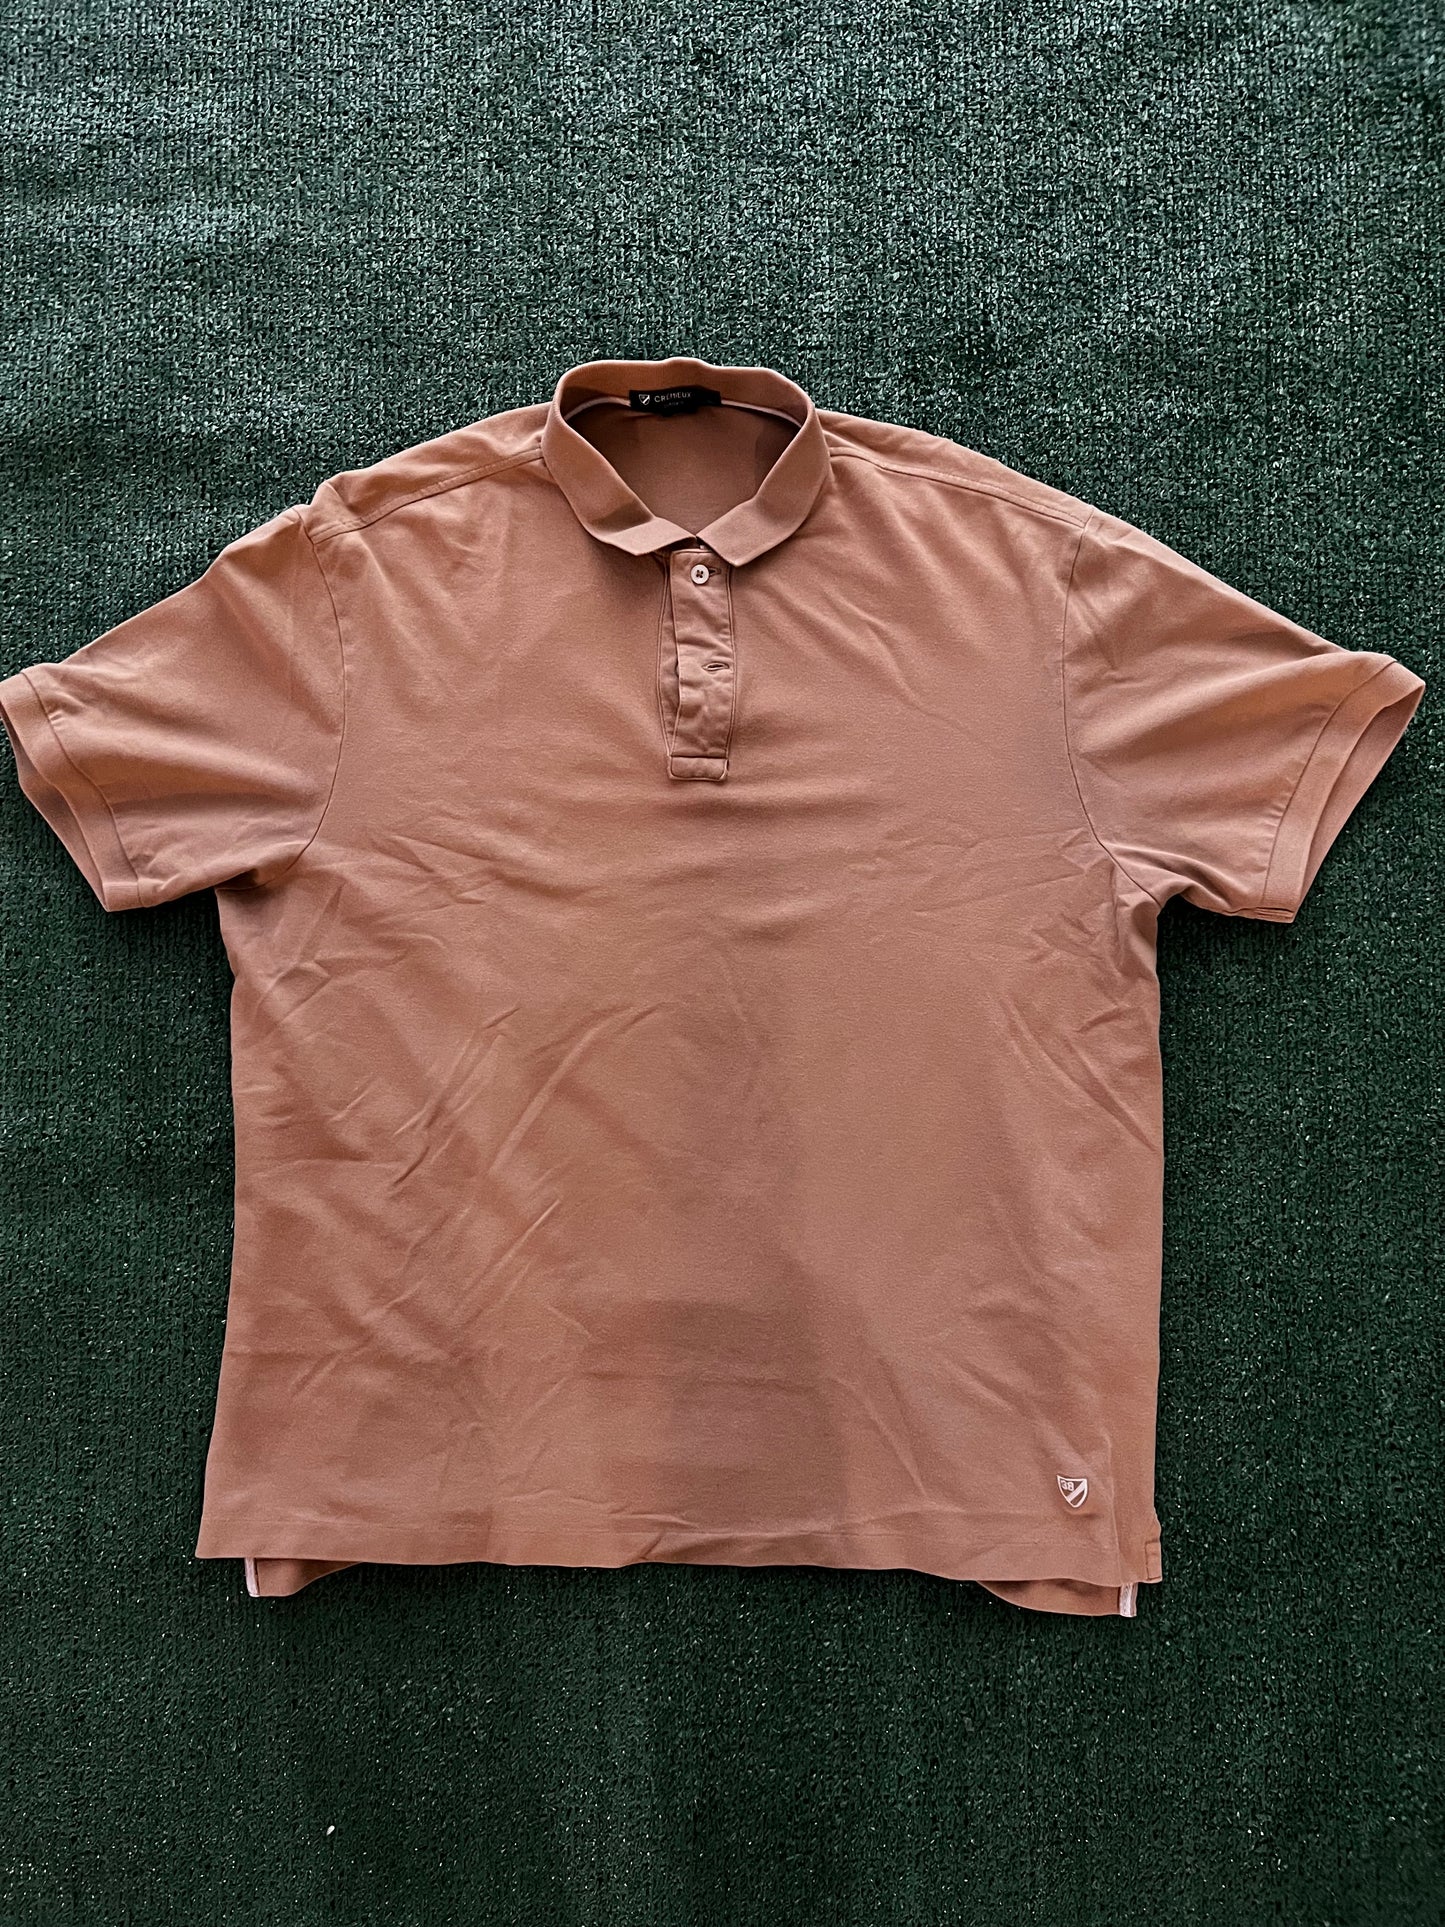 Cremieux Tan Polo Shirt (Large)